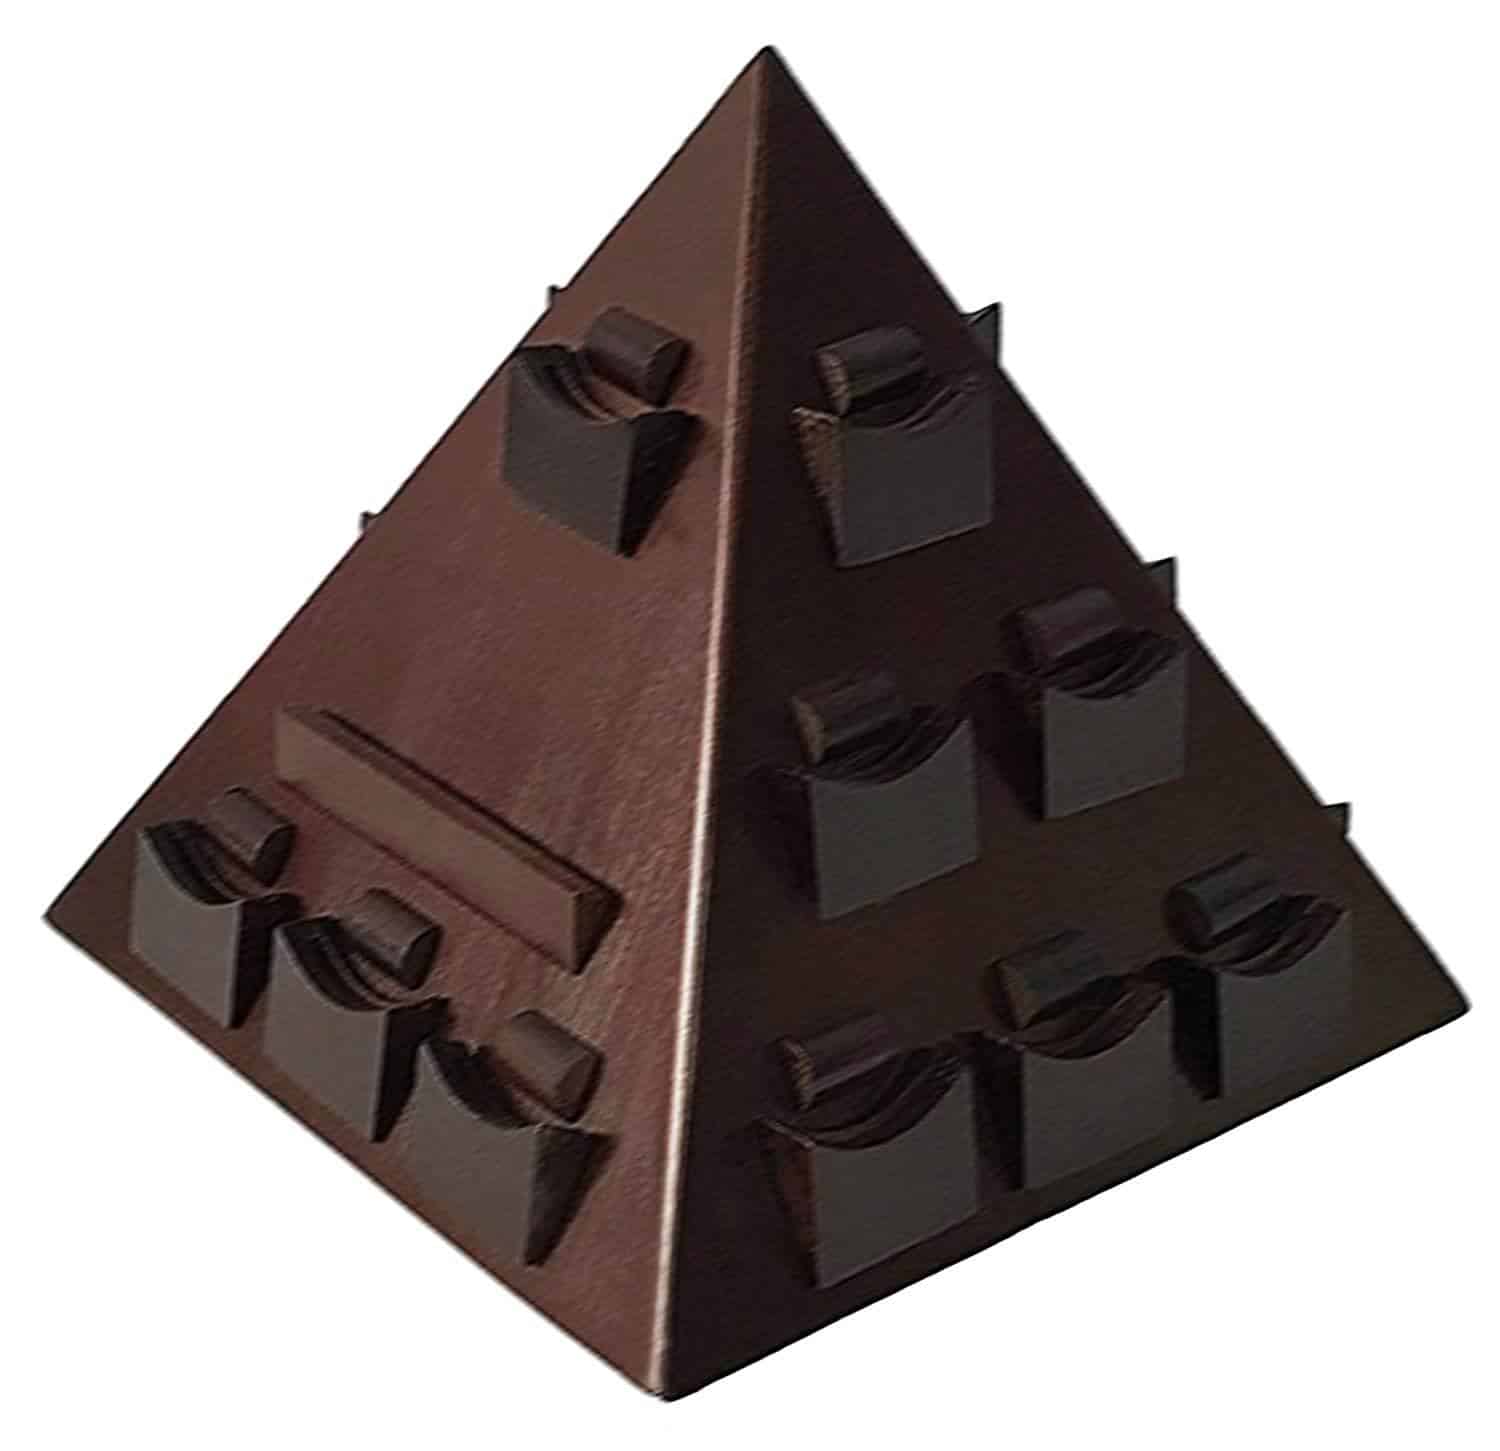 Pyramid Shaped Military Challenge Coin, Poker/Casino Chip Display - Cherry Finish 